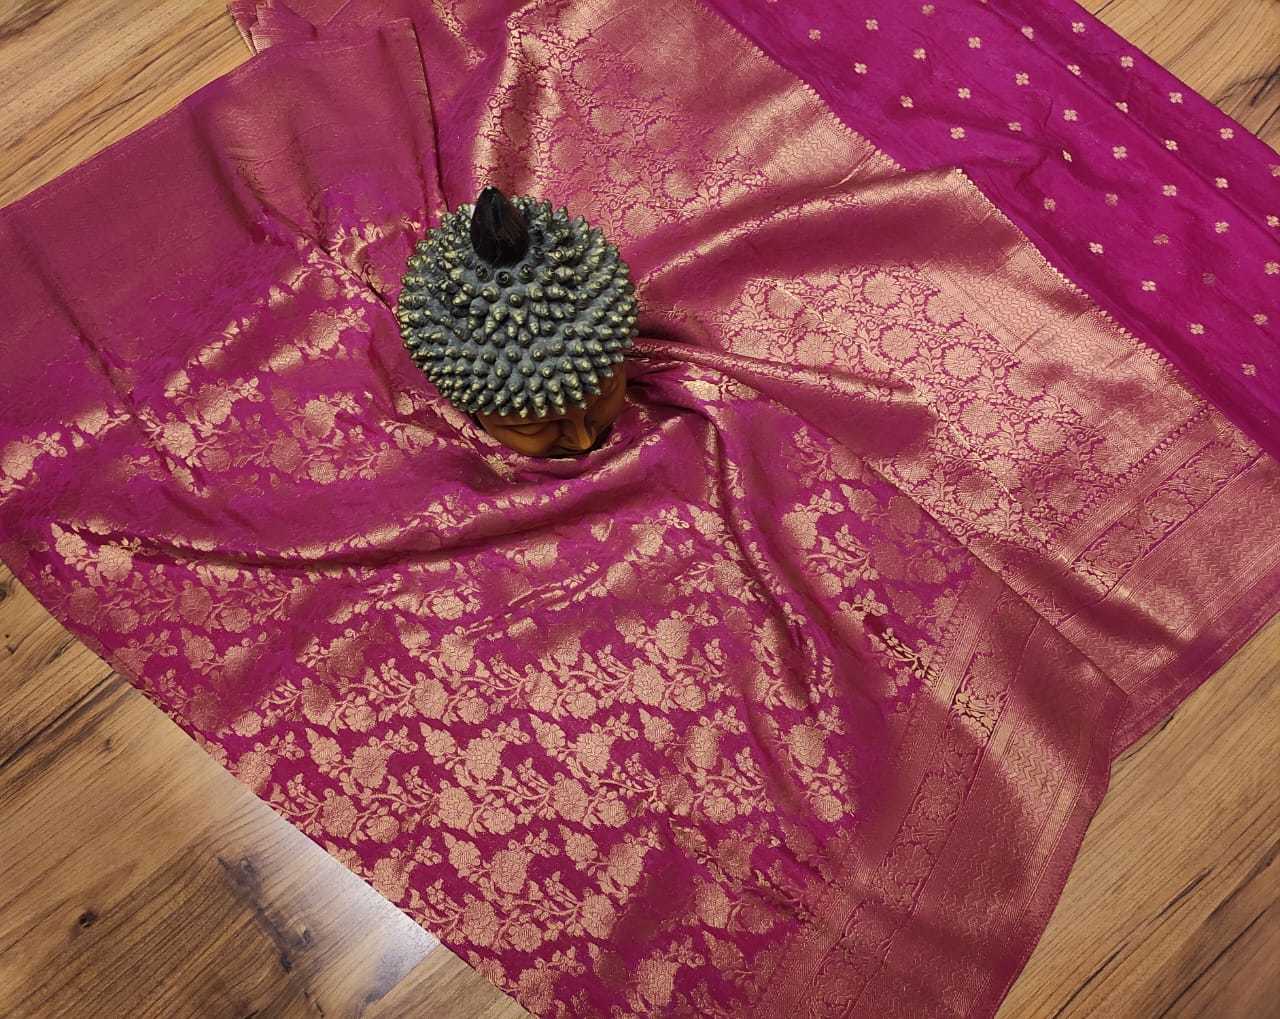 Khadi Georgette silk saree with gold jarie pink